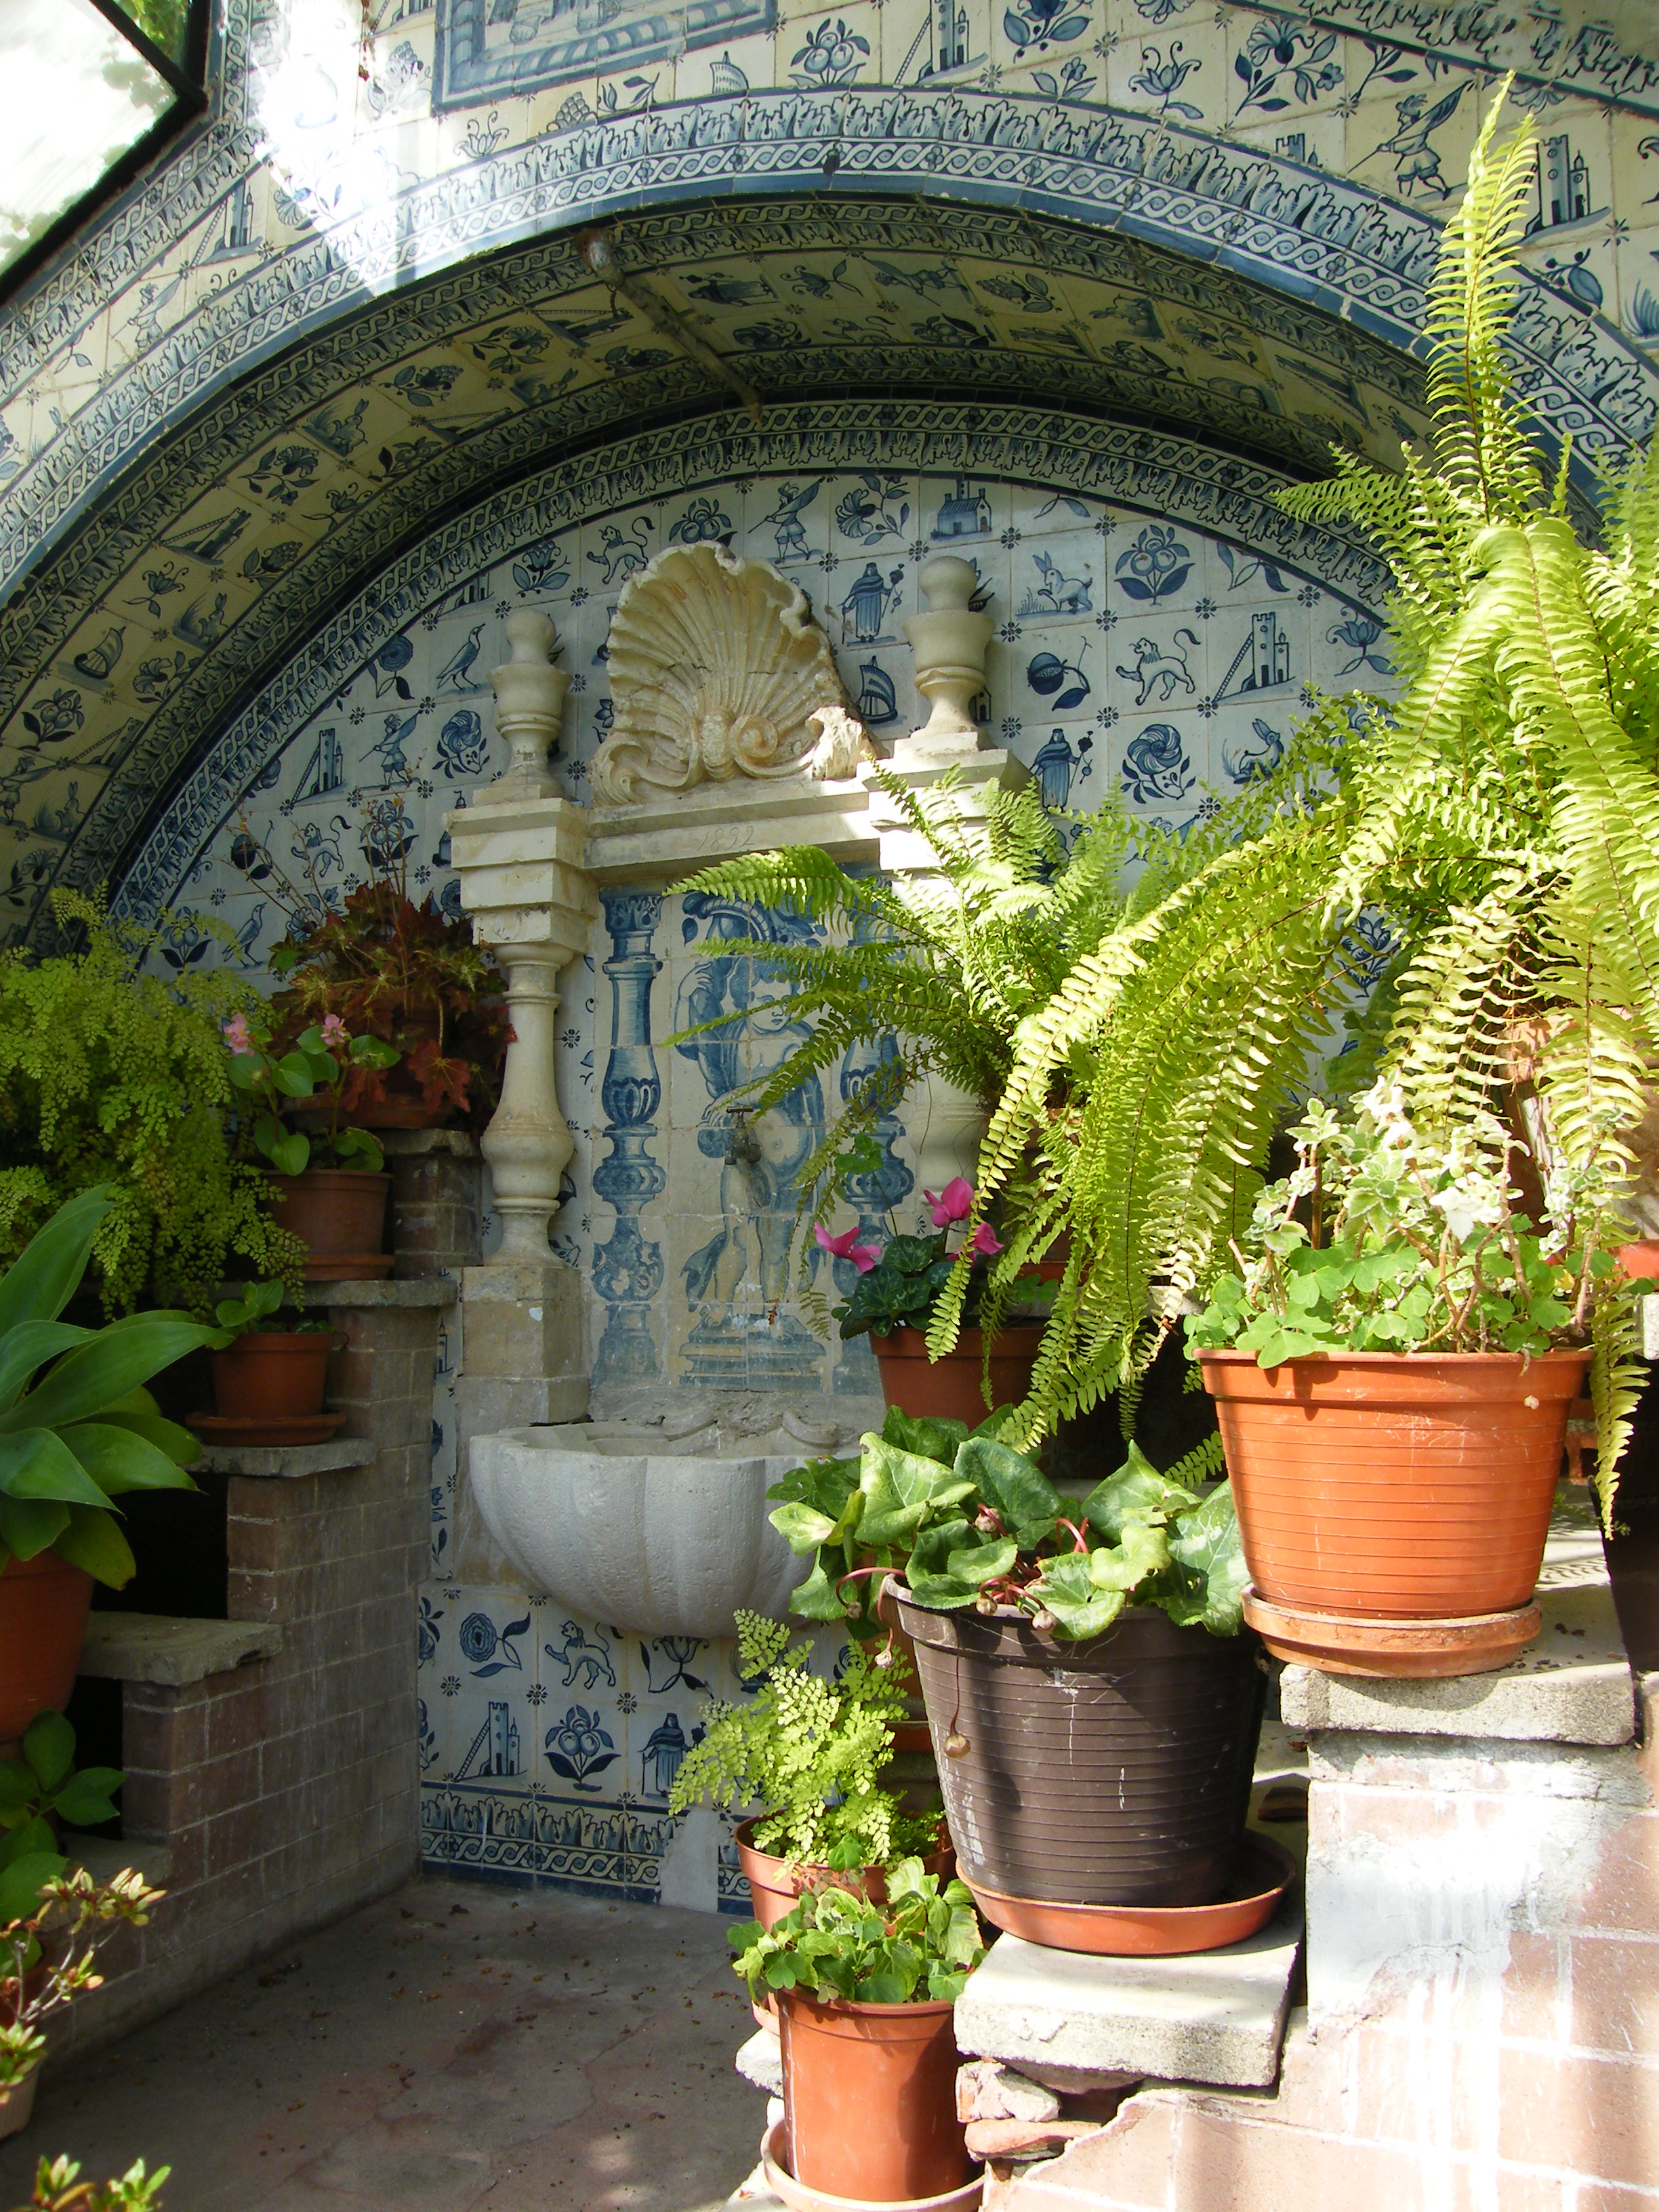 Tiled greenhouse in the garden of Casa Museu Bissaya Barreto in Coimbra